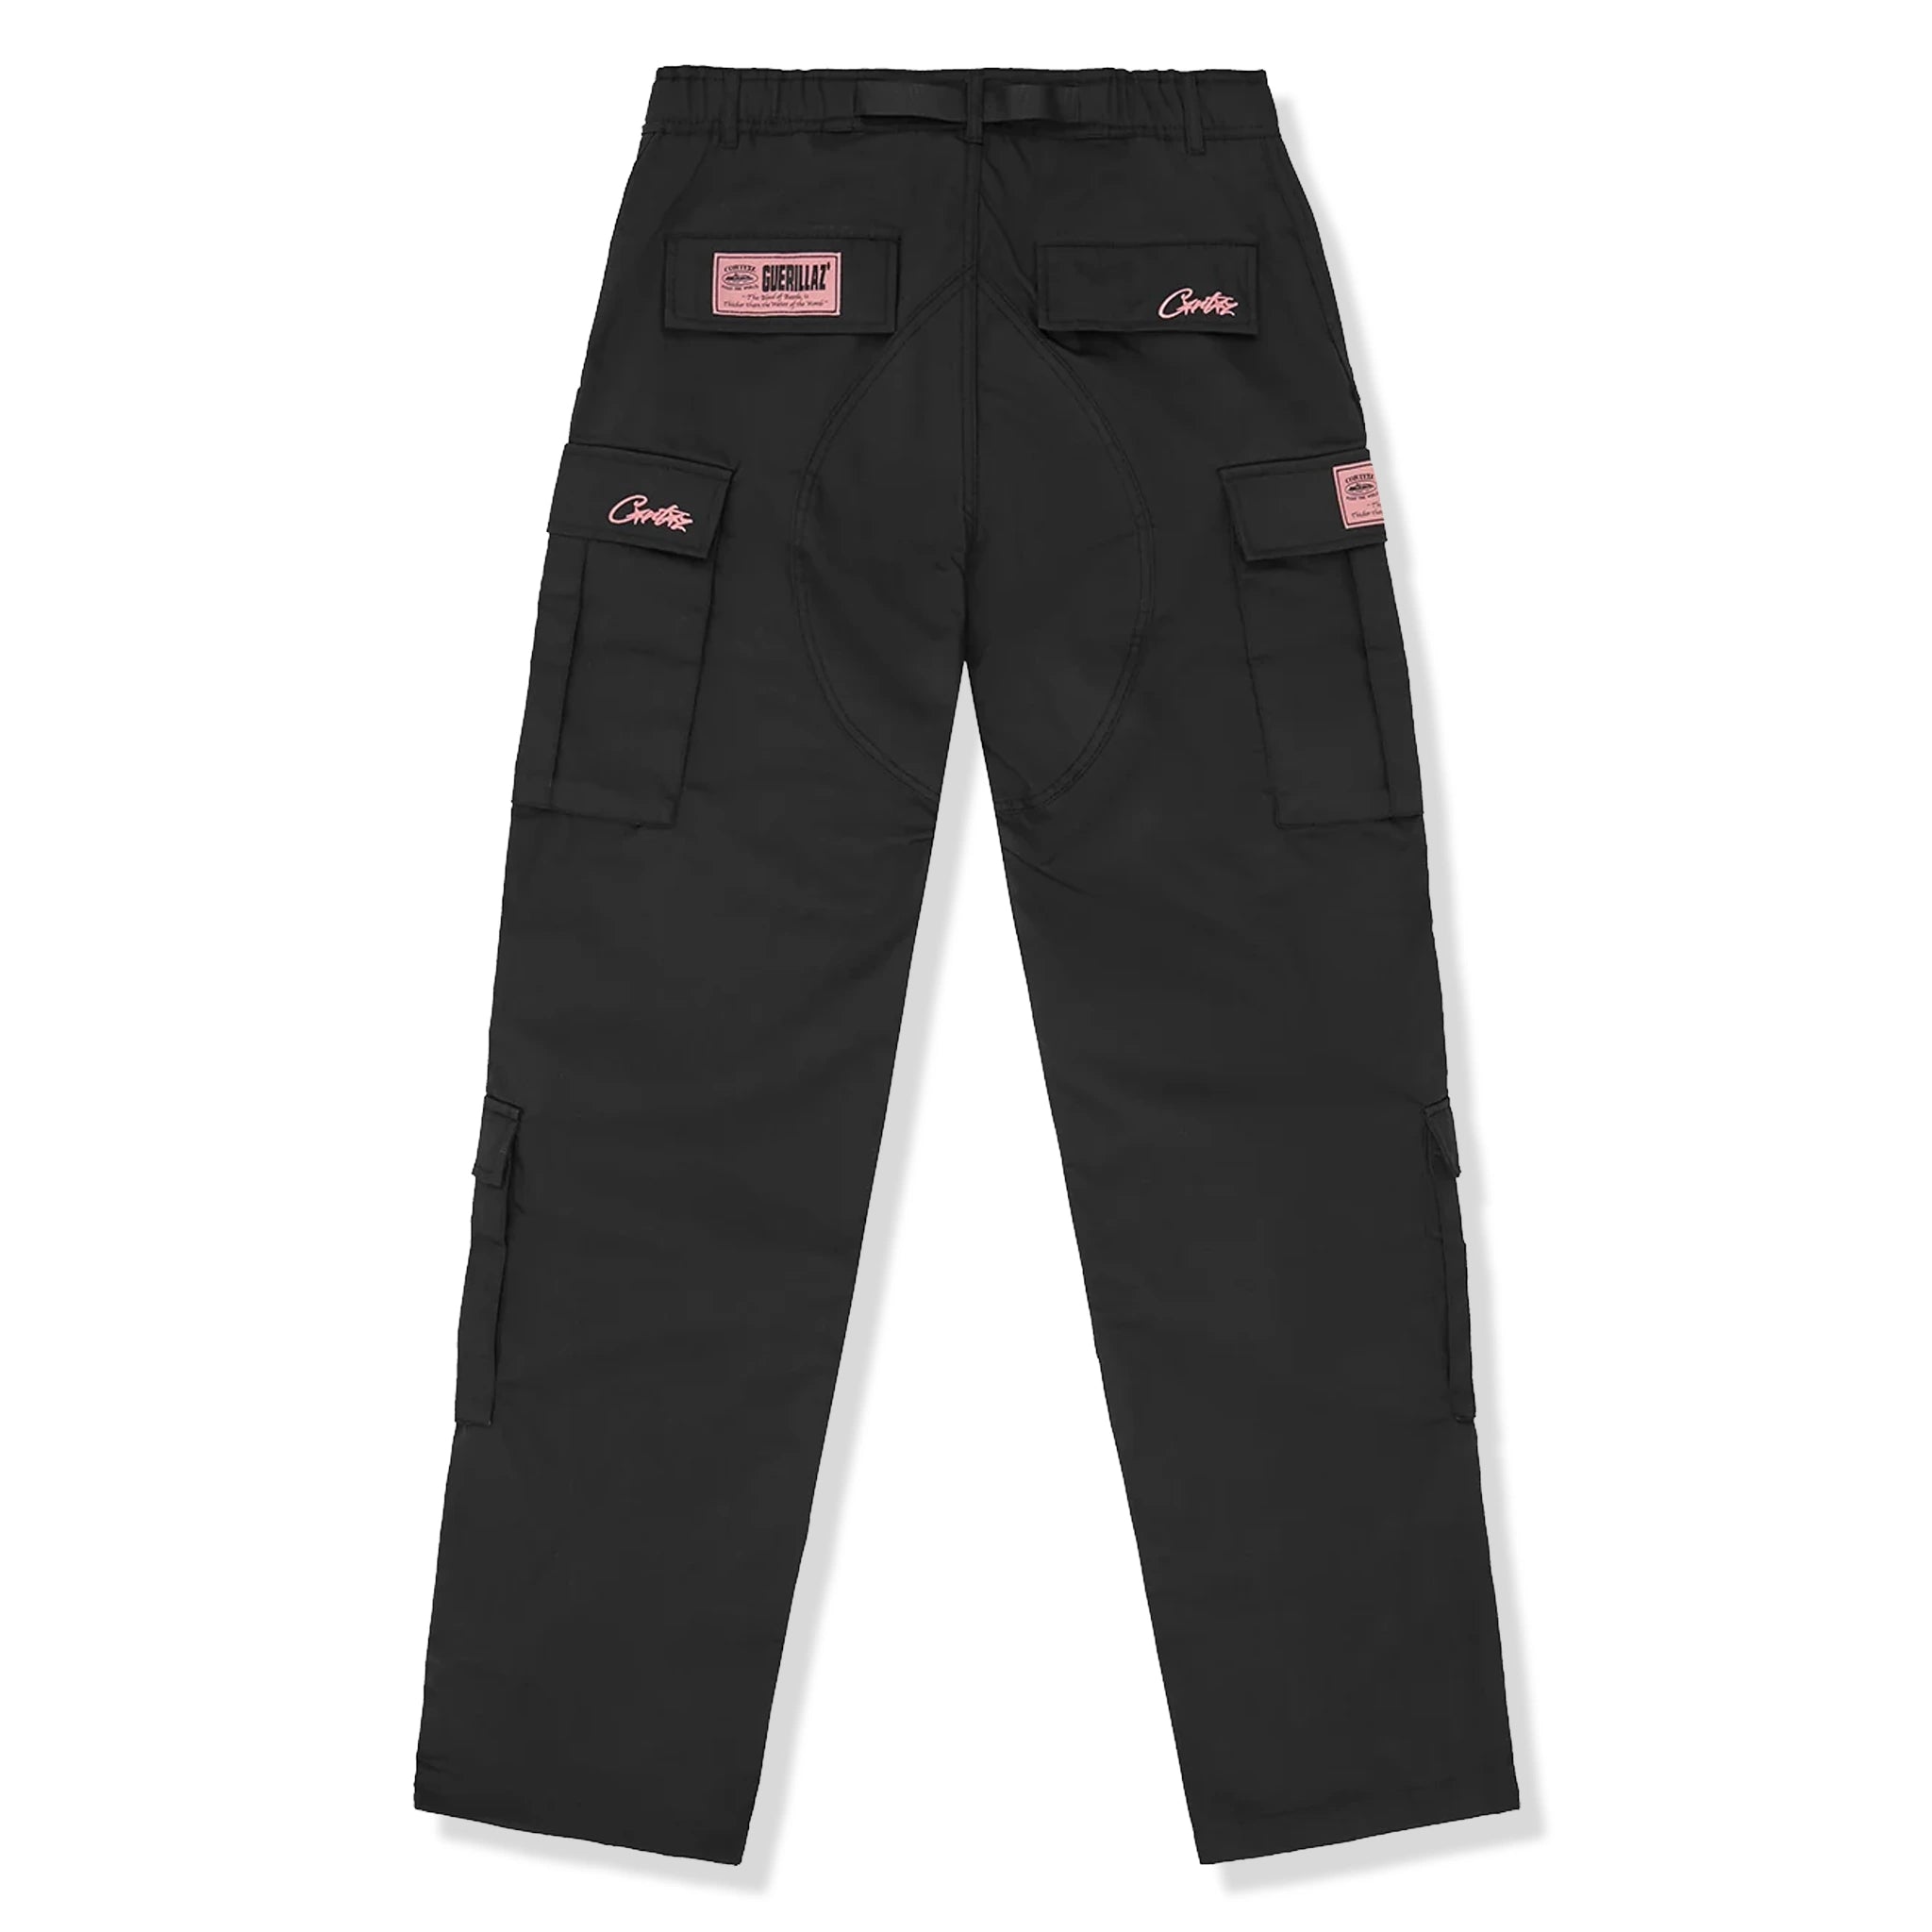 Back view of Corteiz Guerillaz Black Pink Cargo Pants